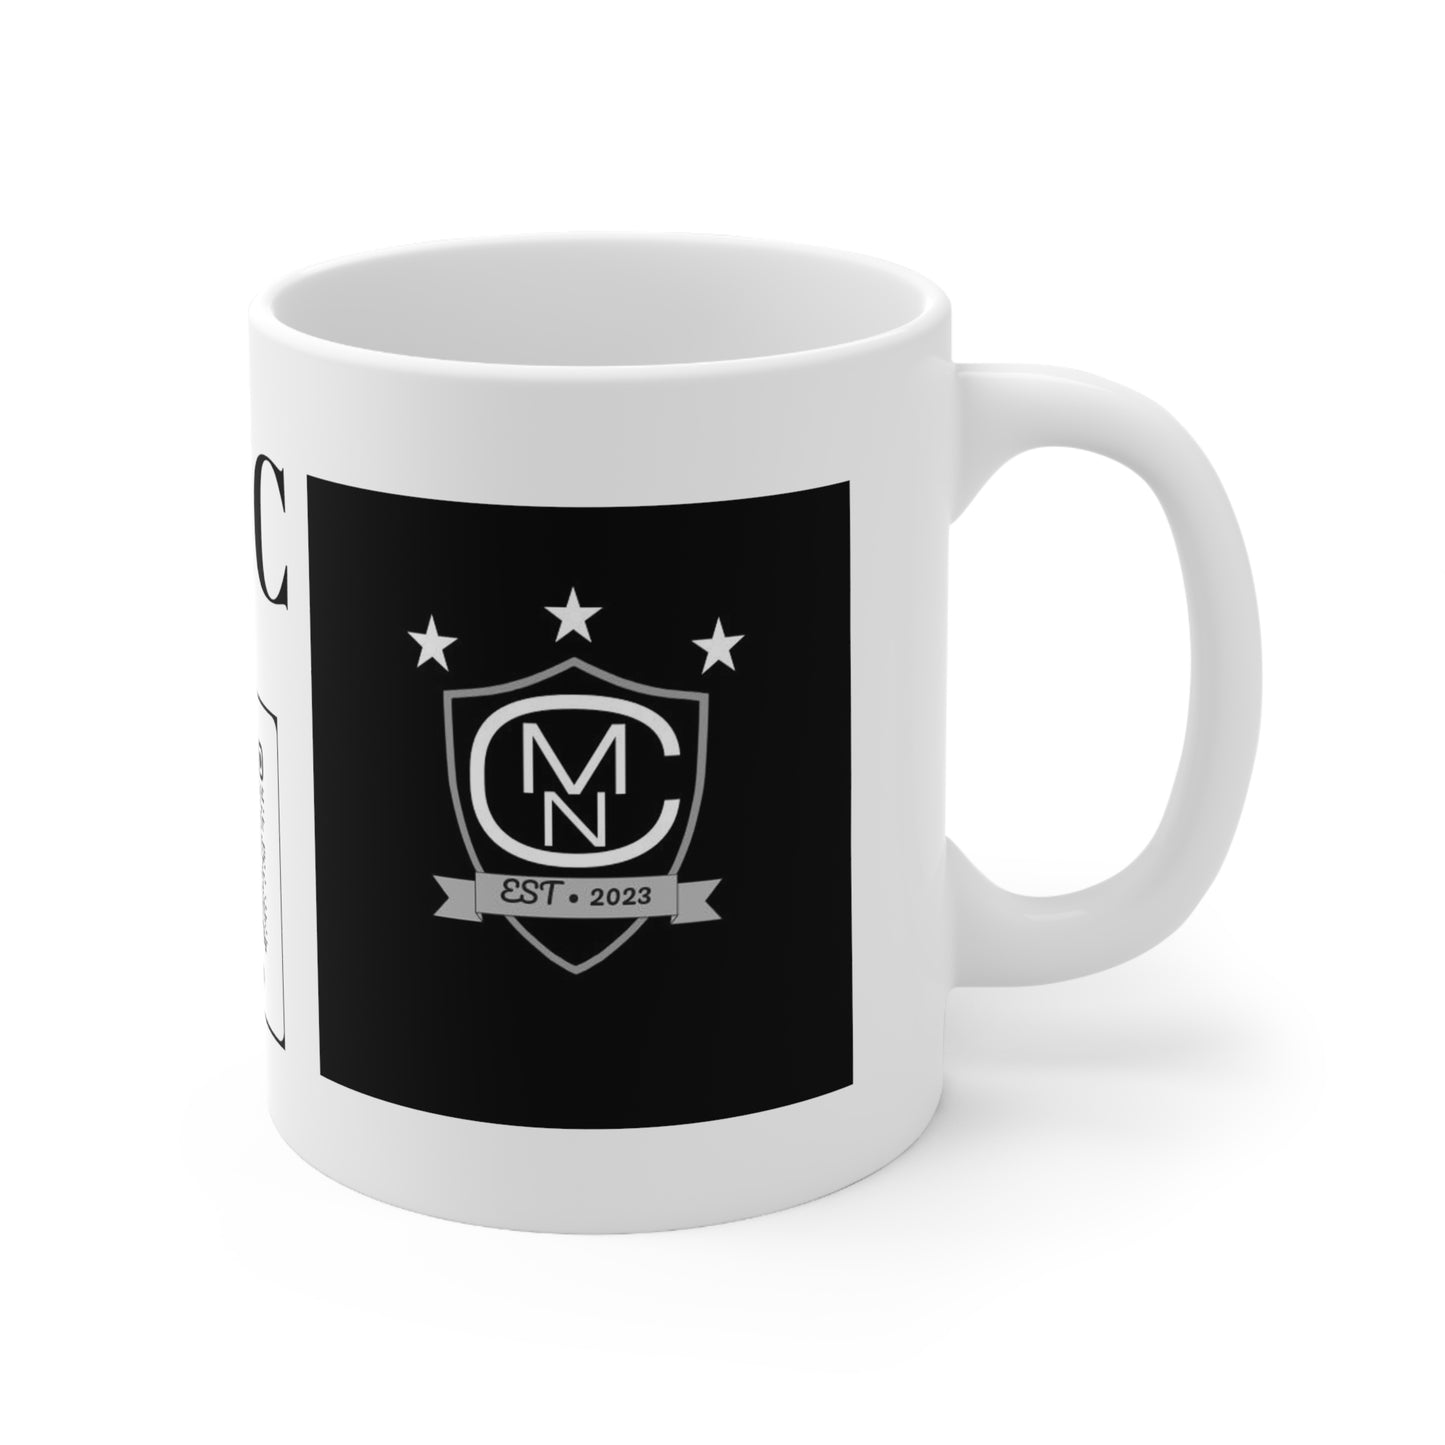 Ceramic Mug 11oz MNC Logo